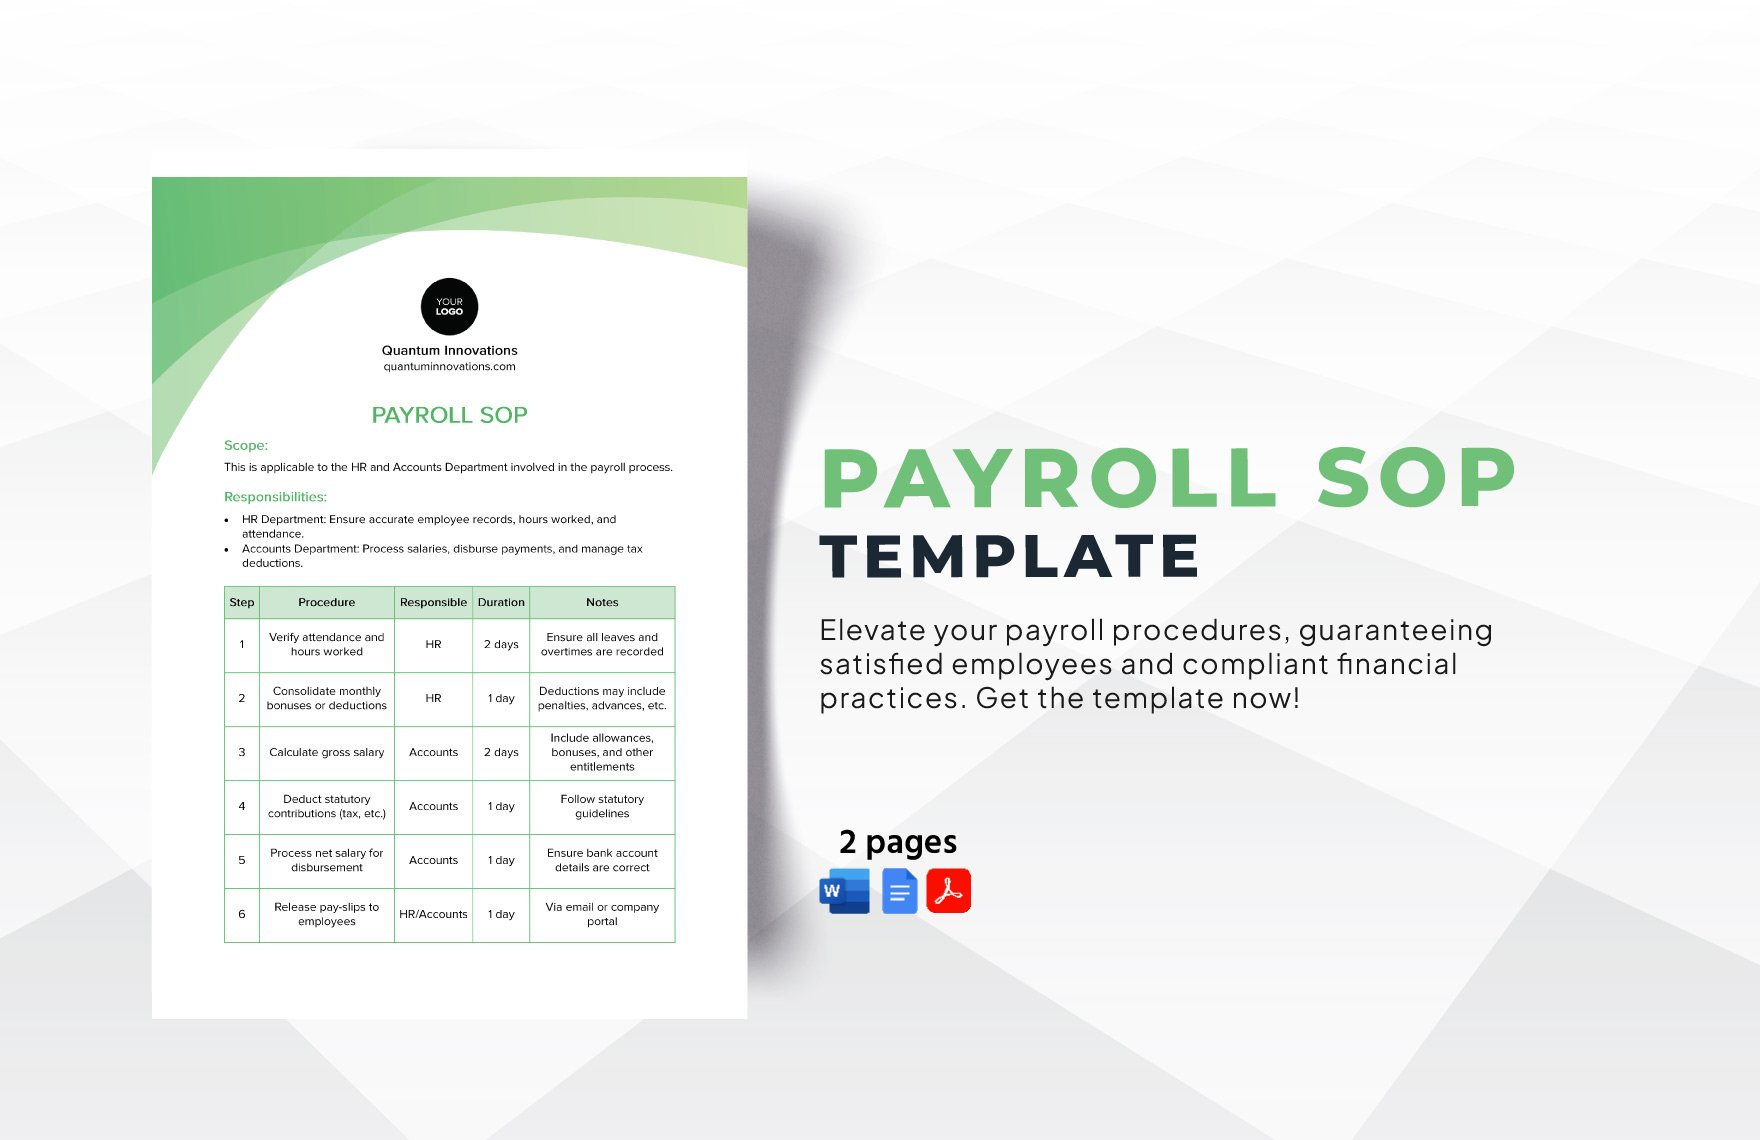 Payroll SOP Template